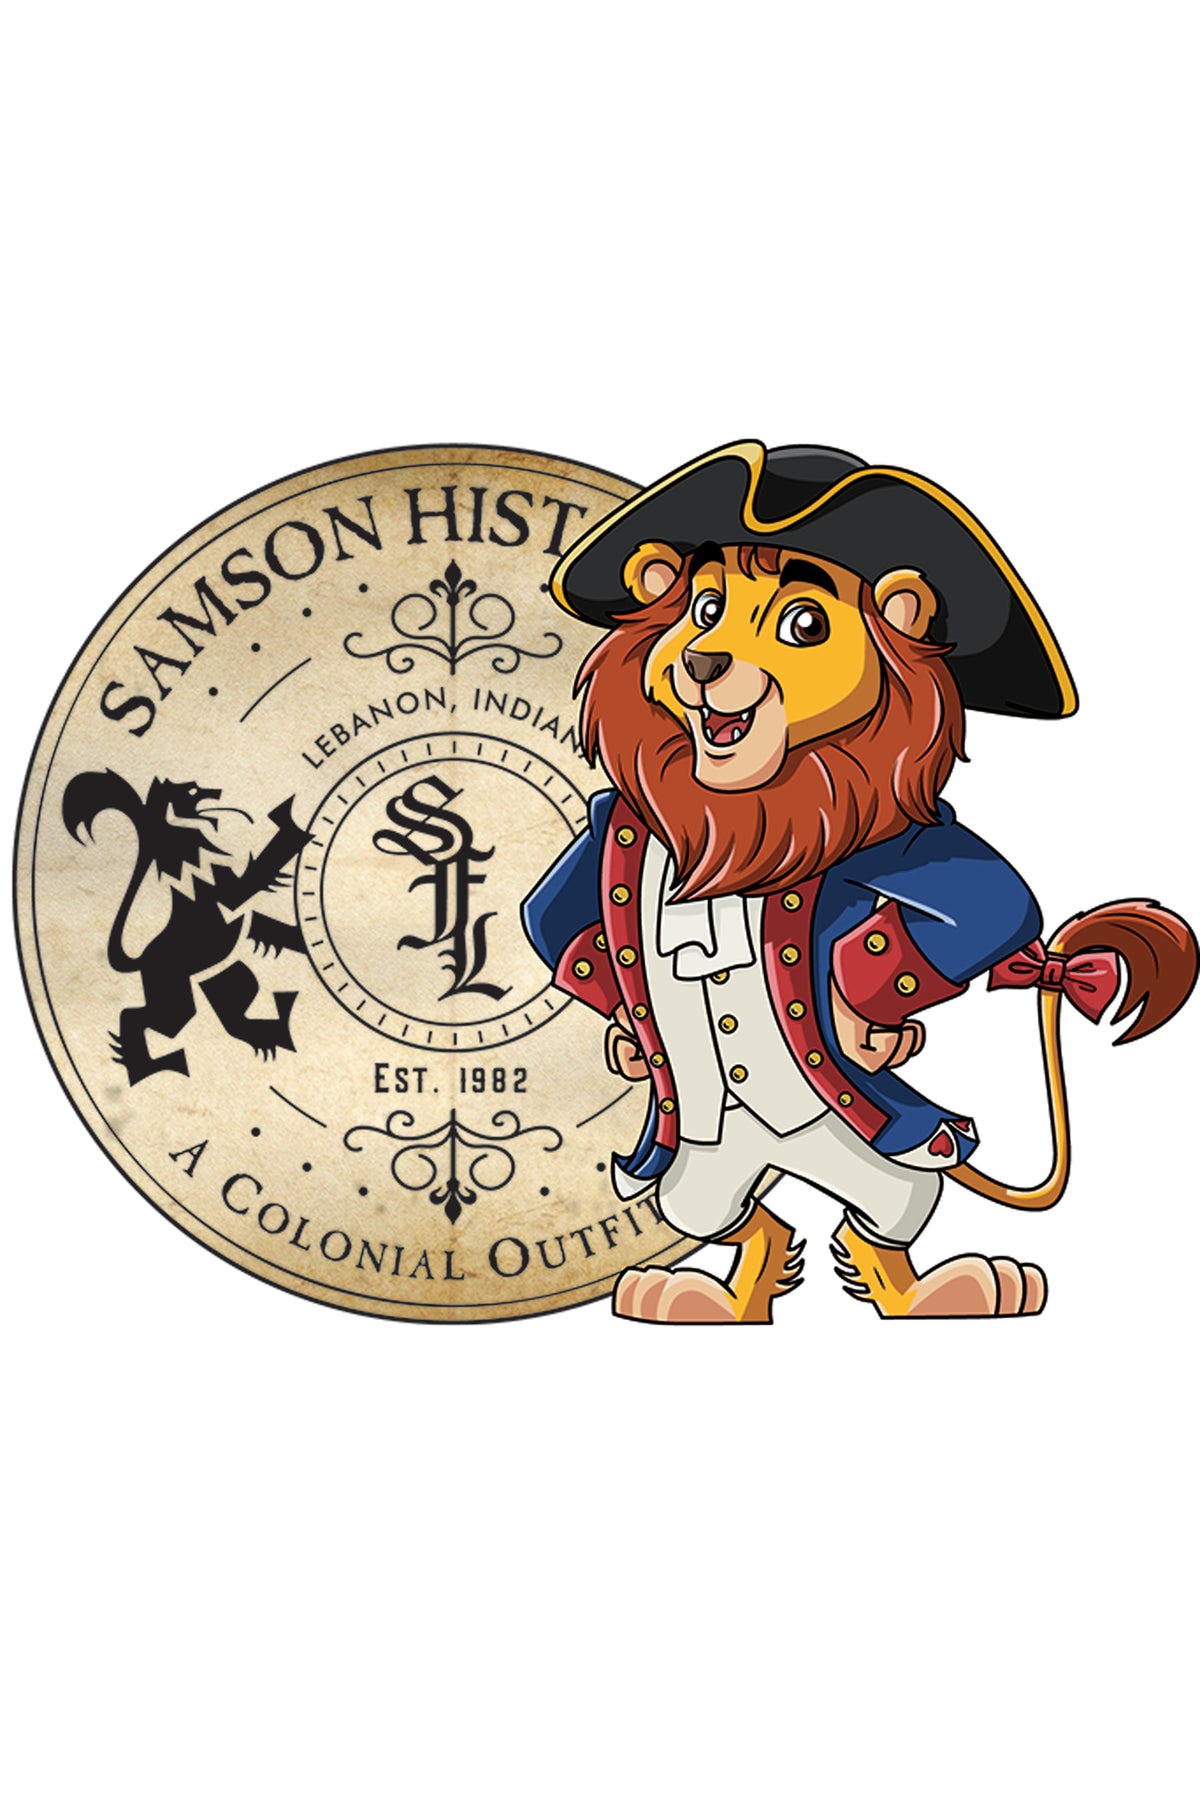 George &amp; Samson Historical Sticker